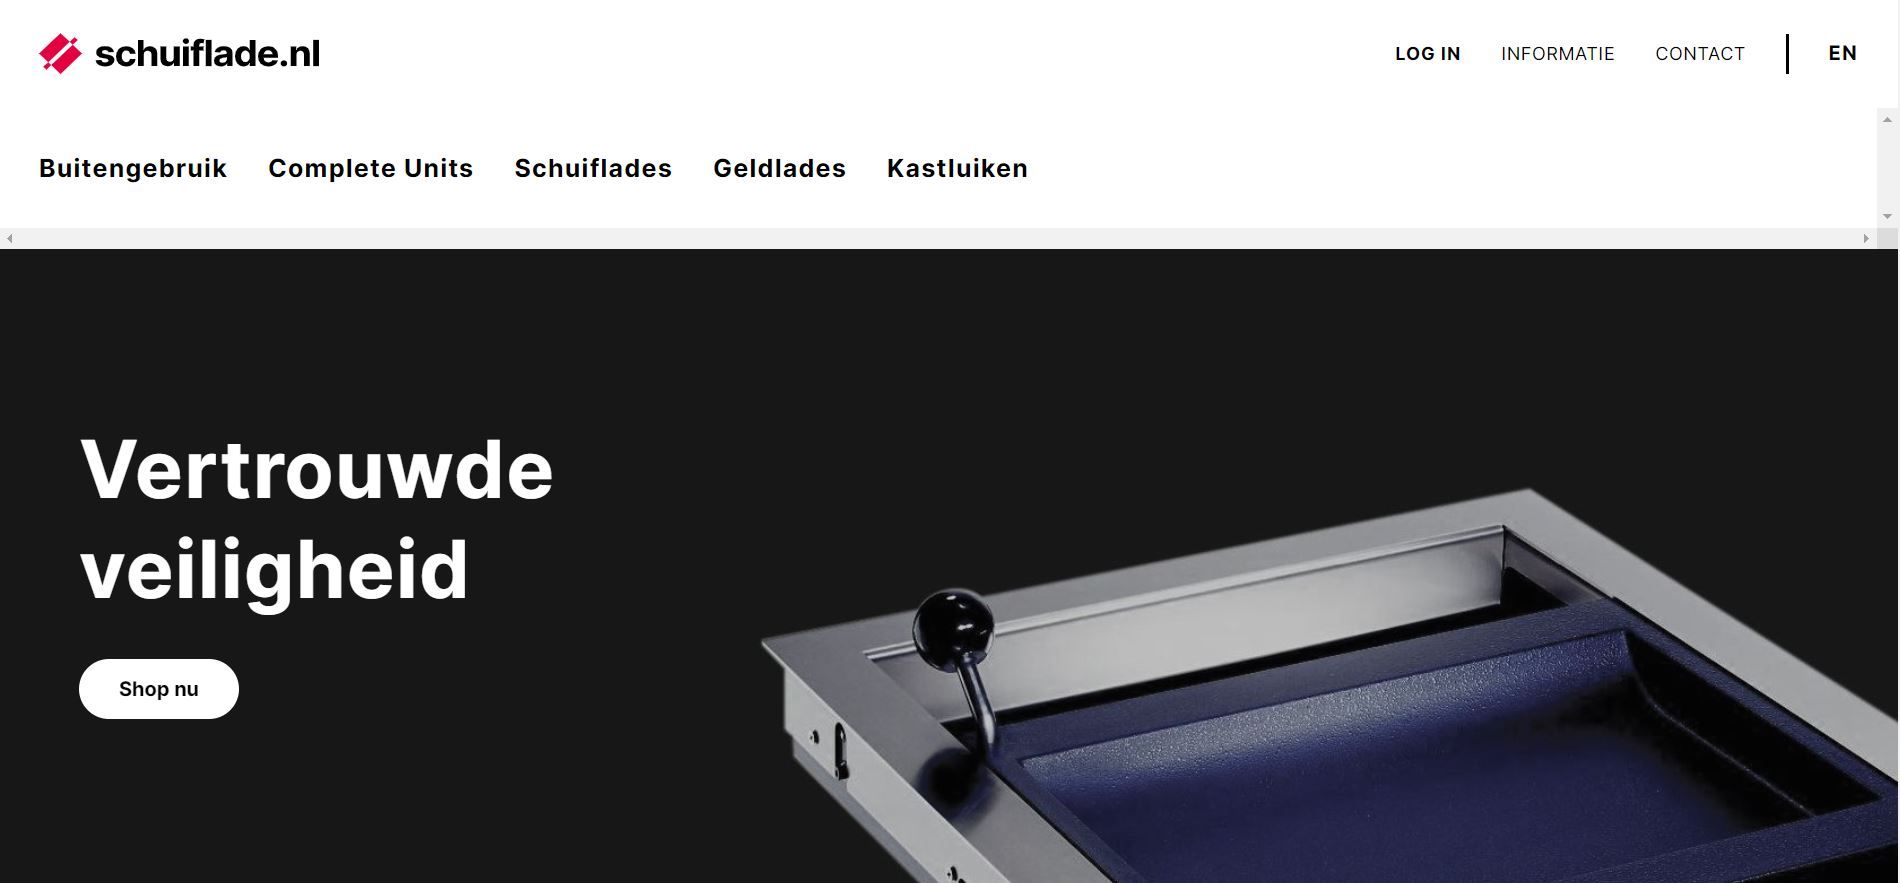 Schuiflade.nl/en for sliding trays and information